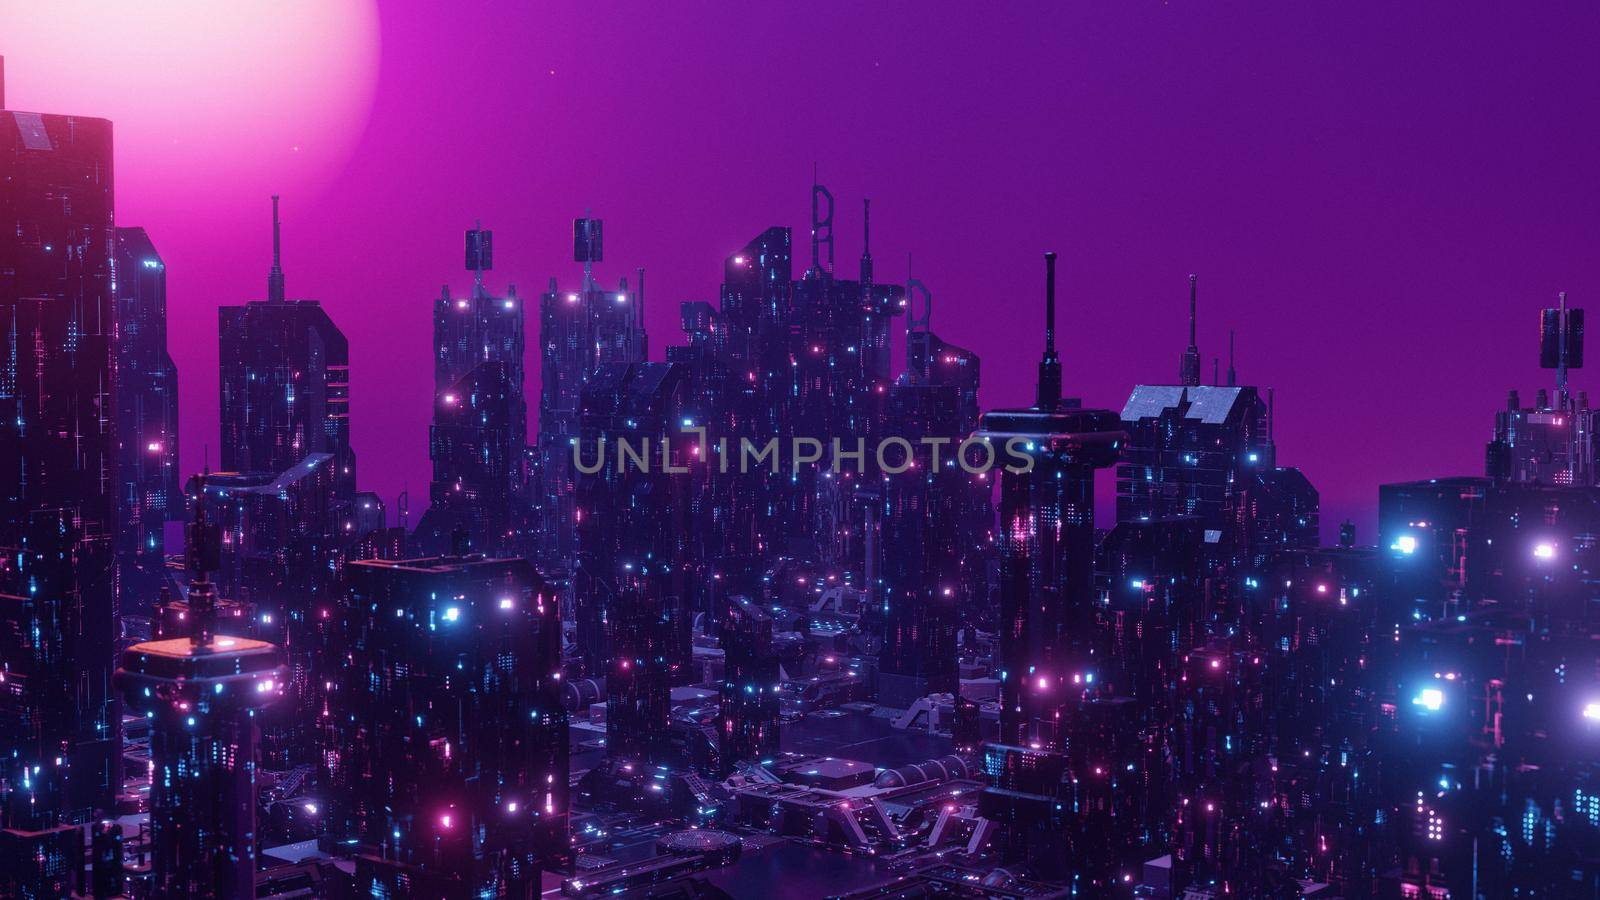 Red Purple Blue Light Neon Skyscraper Cyber Punk City Wallpaper Background 3d Illustration by yay_lmrb